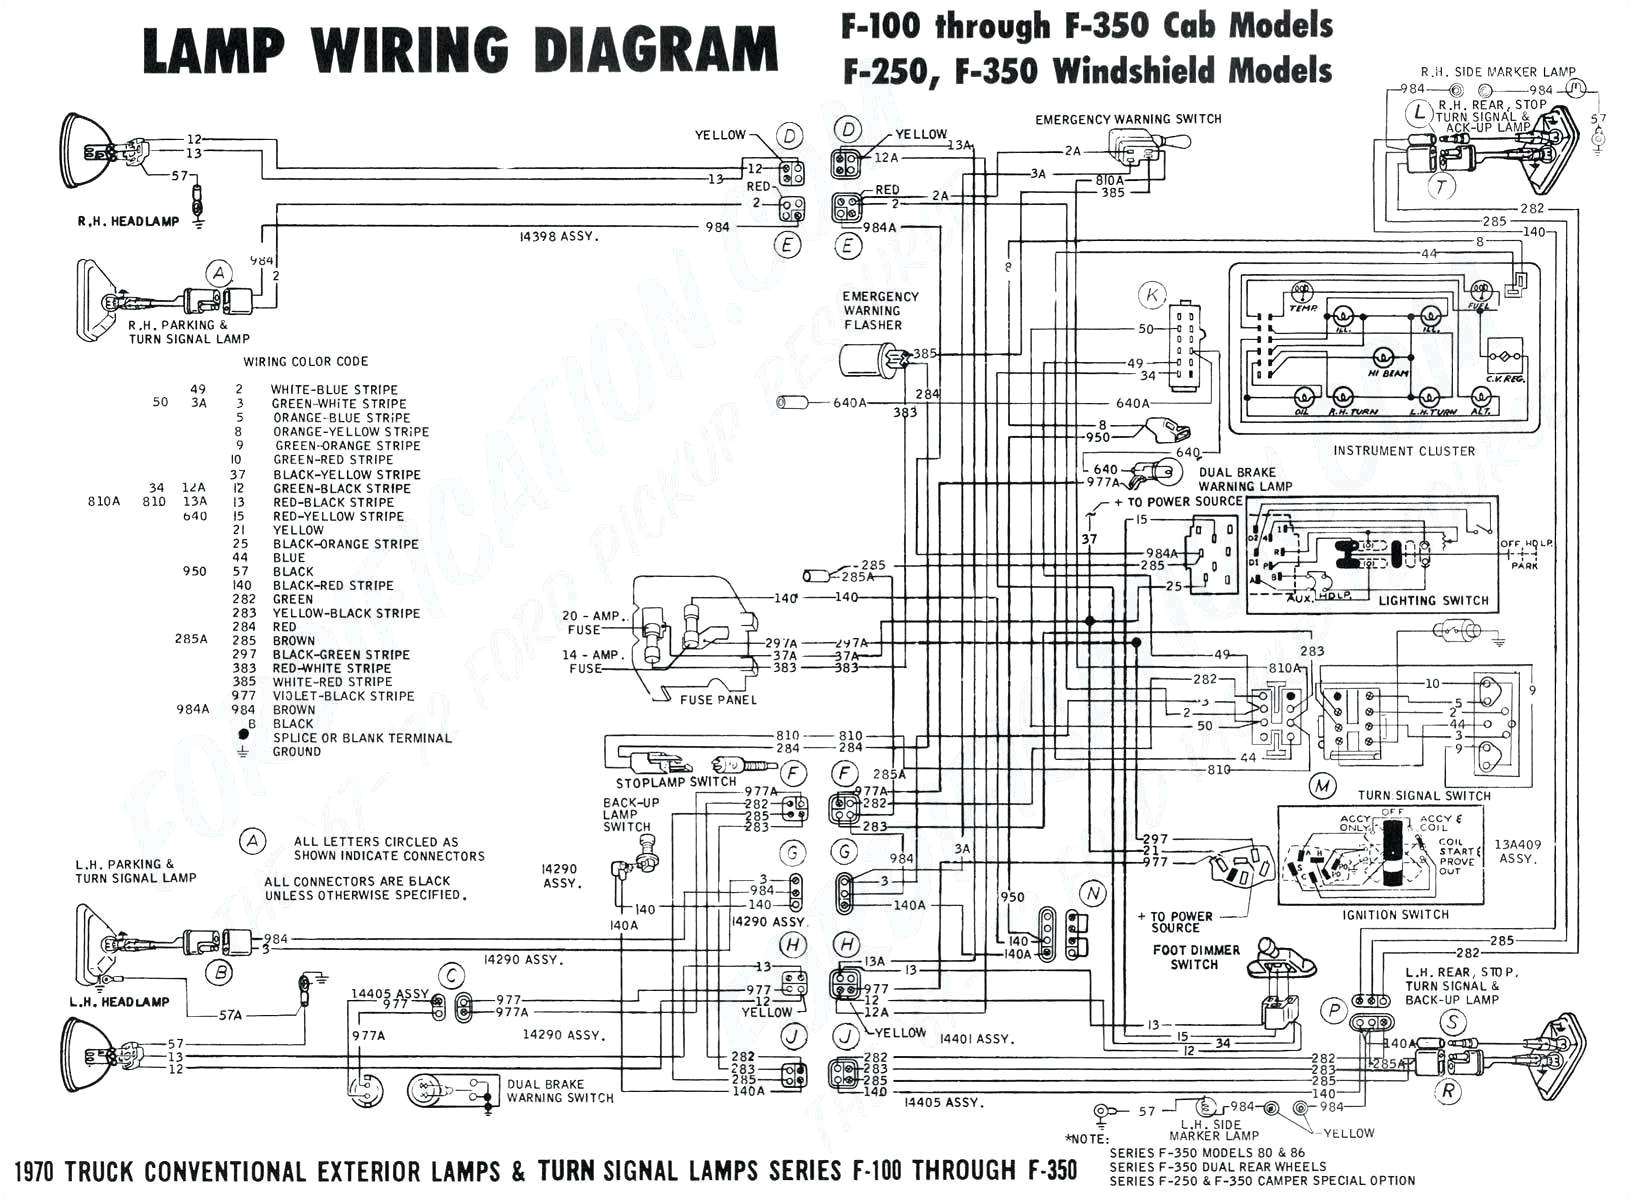 88 toyota Pickup Wiring Diagram 86 isuzu Pup Wiring Diagram Wiring Diagram Show